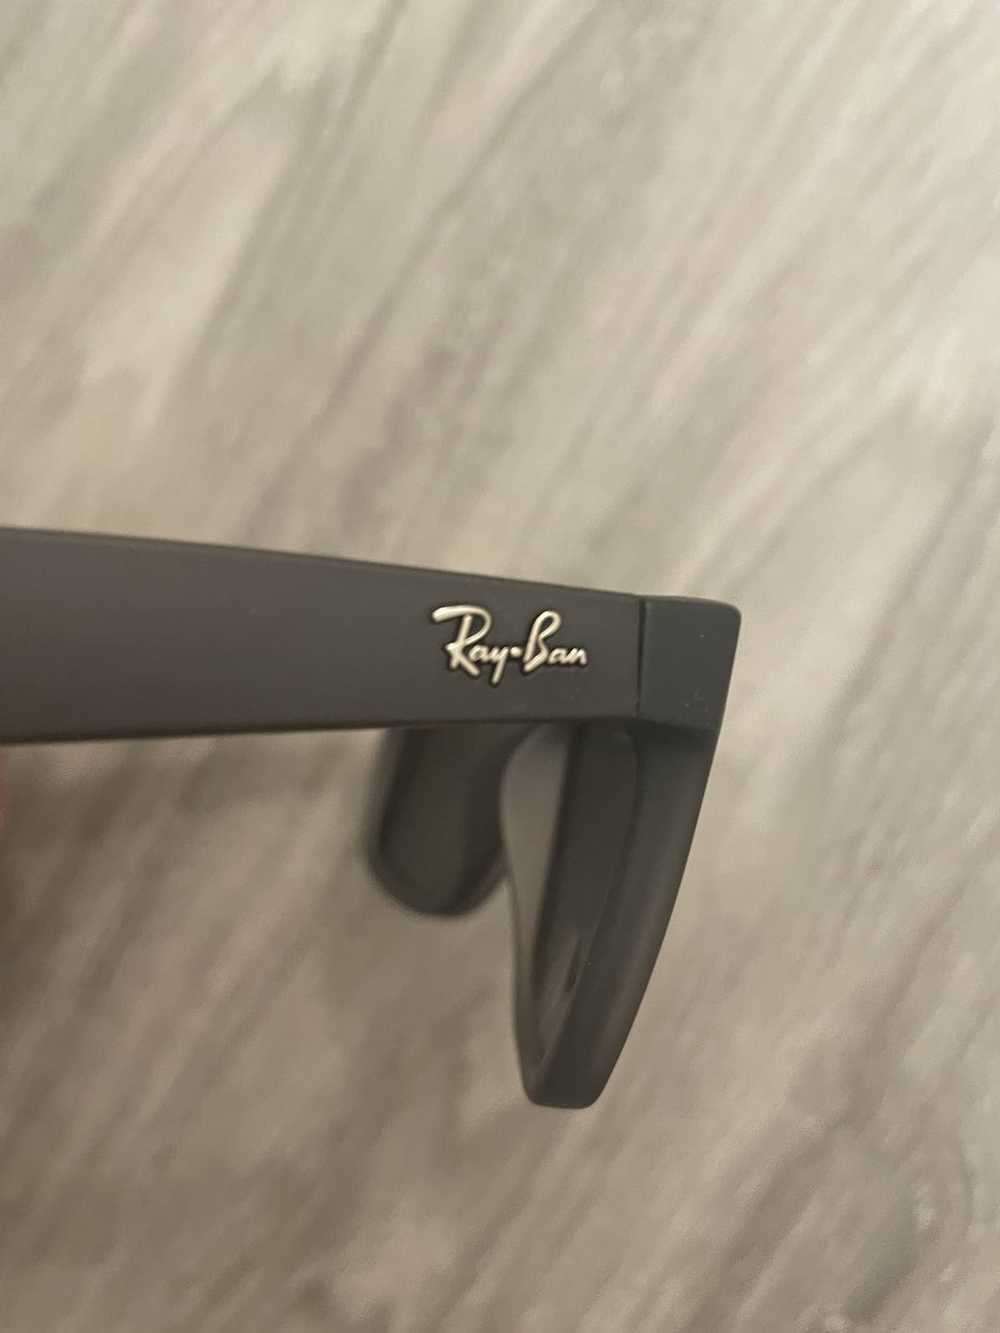 RayBan RayBan Sunglasses - image 7